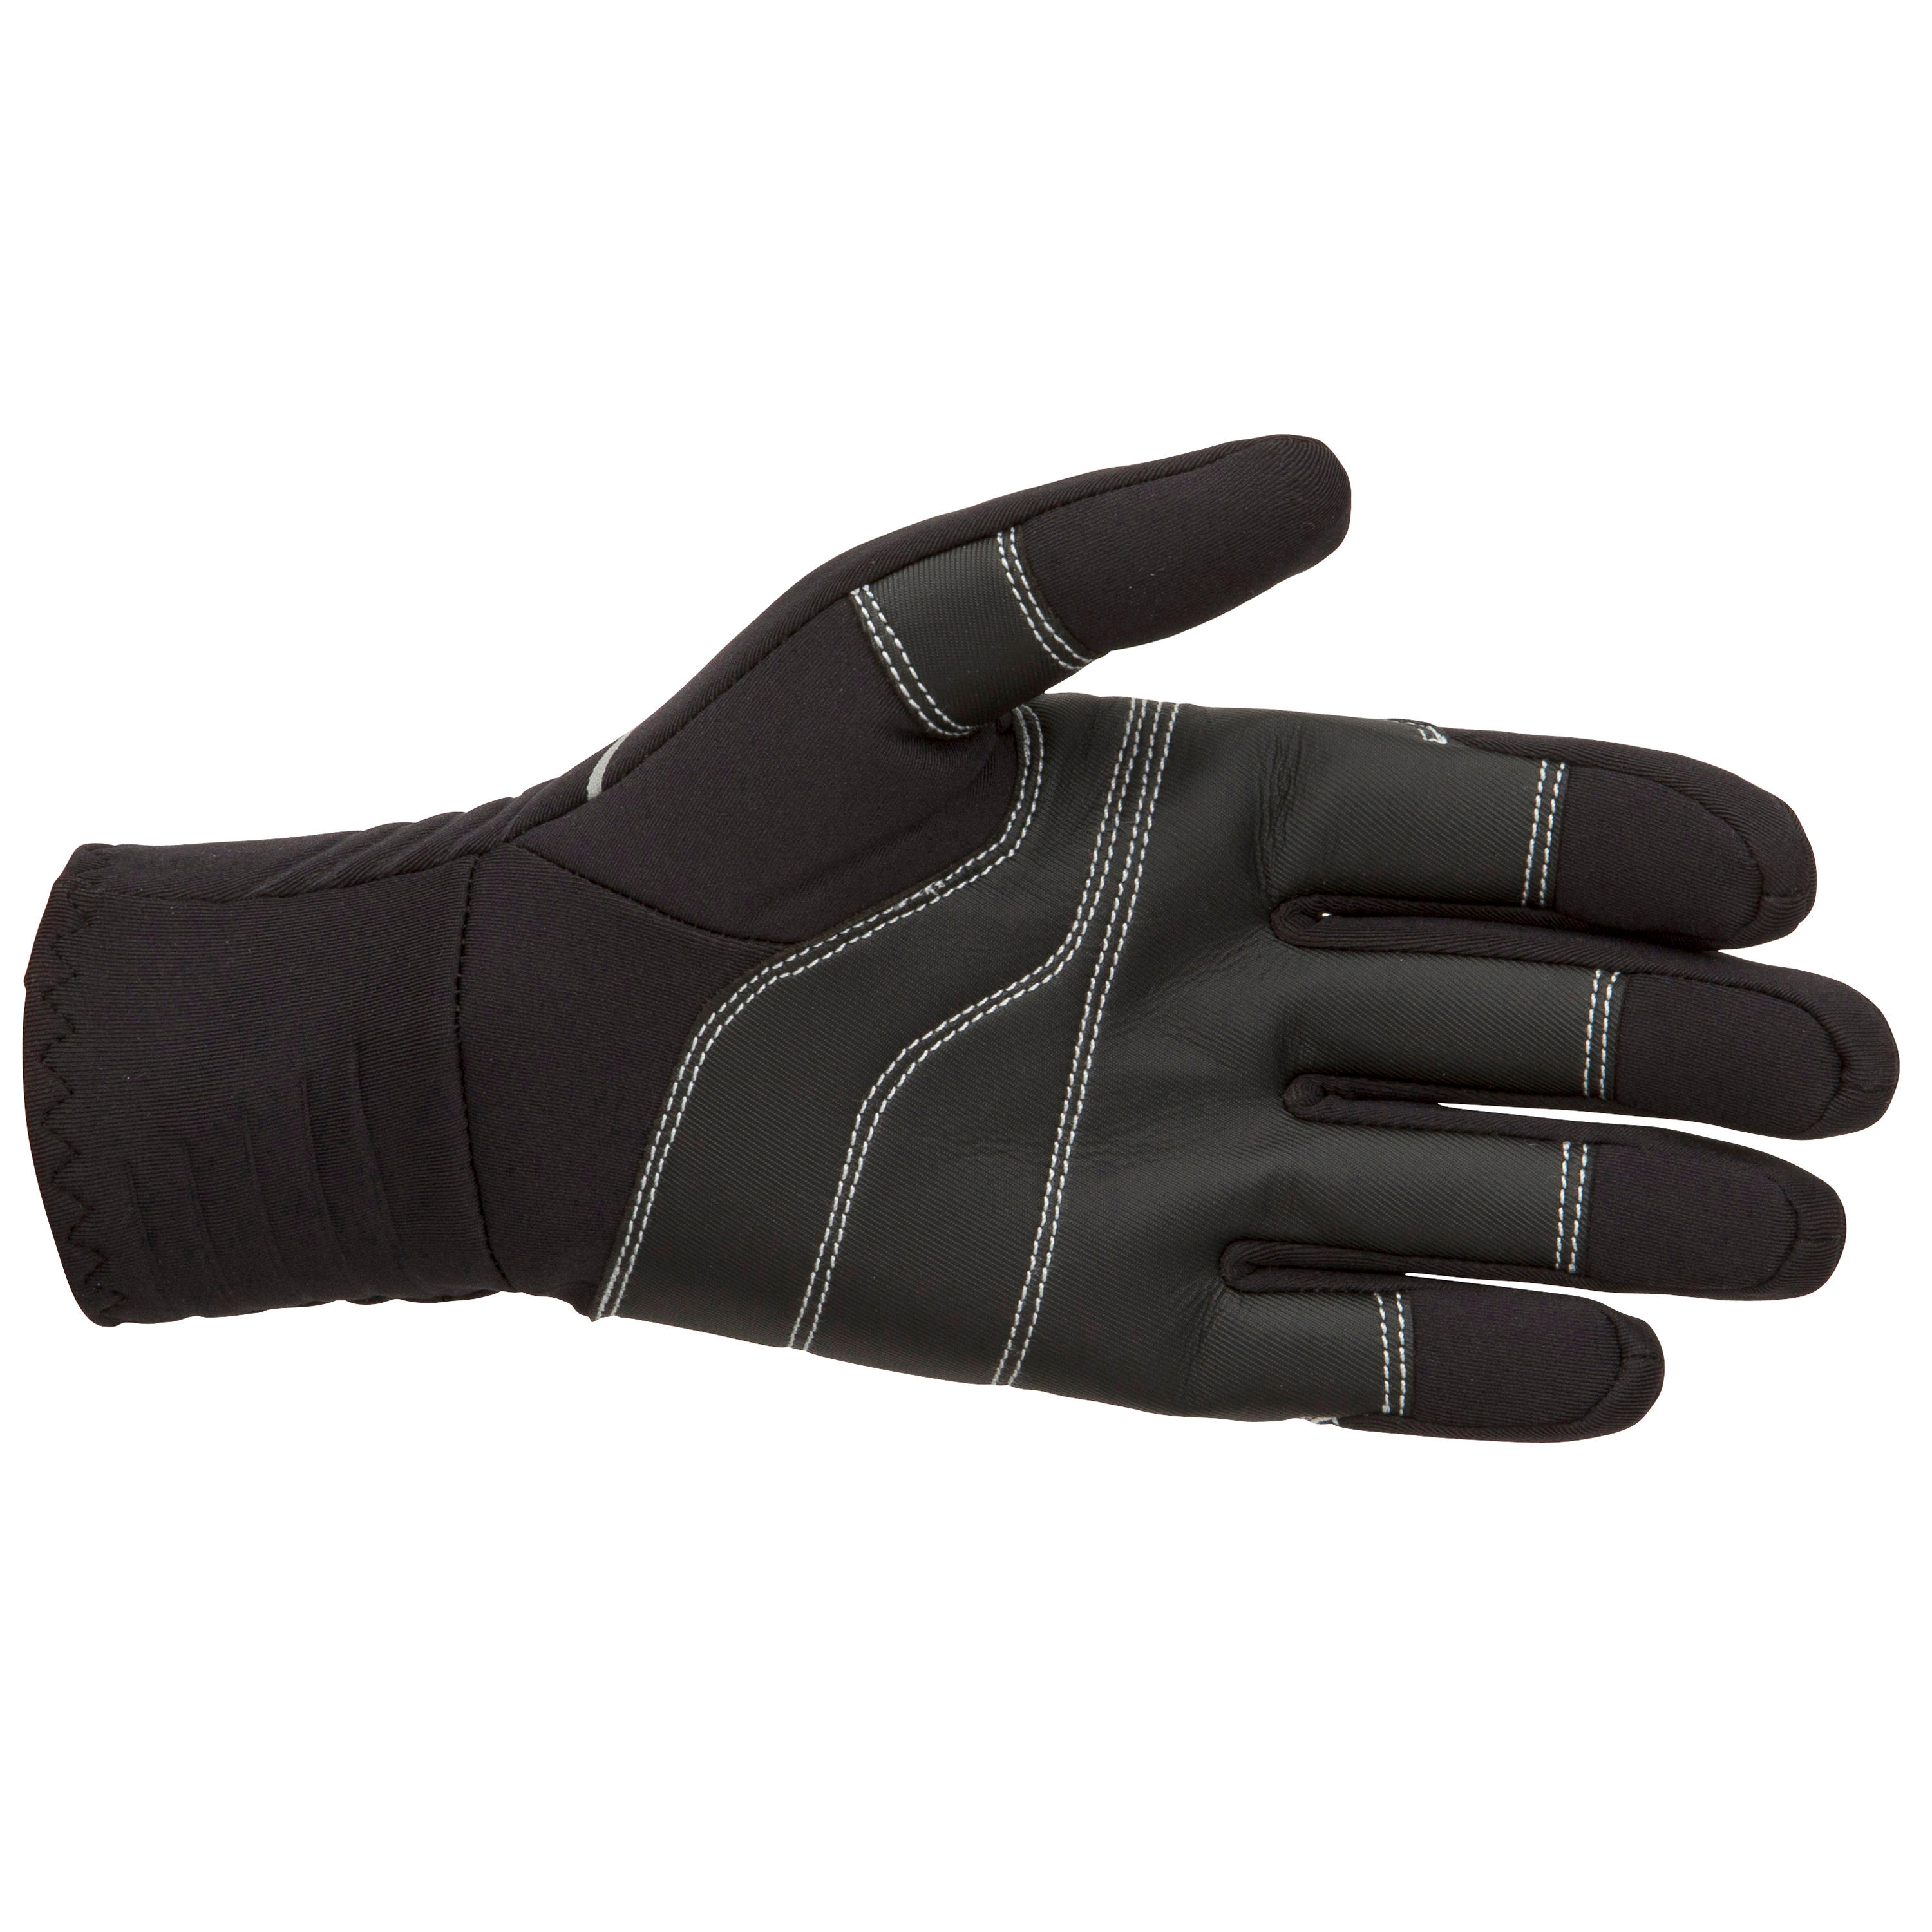 Adult sailing gloves 900 - 1 mm neoprene, black 3/5